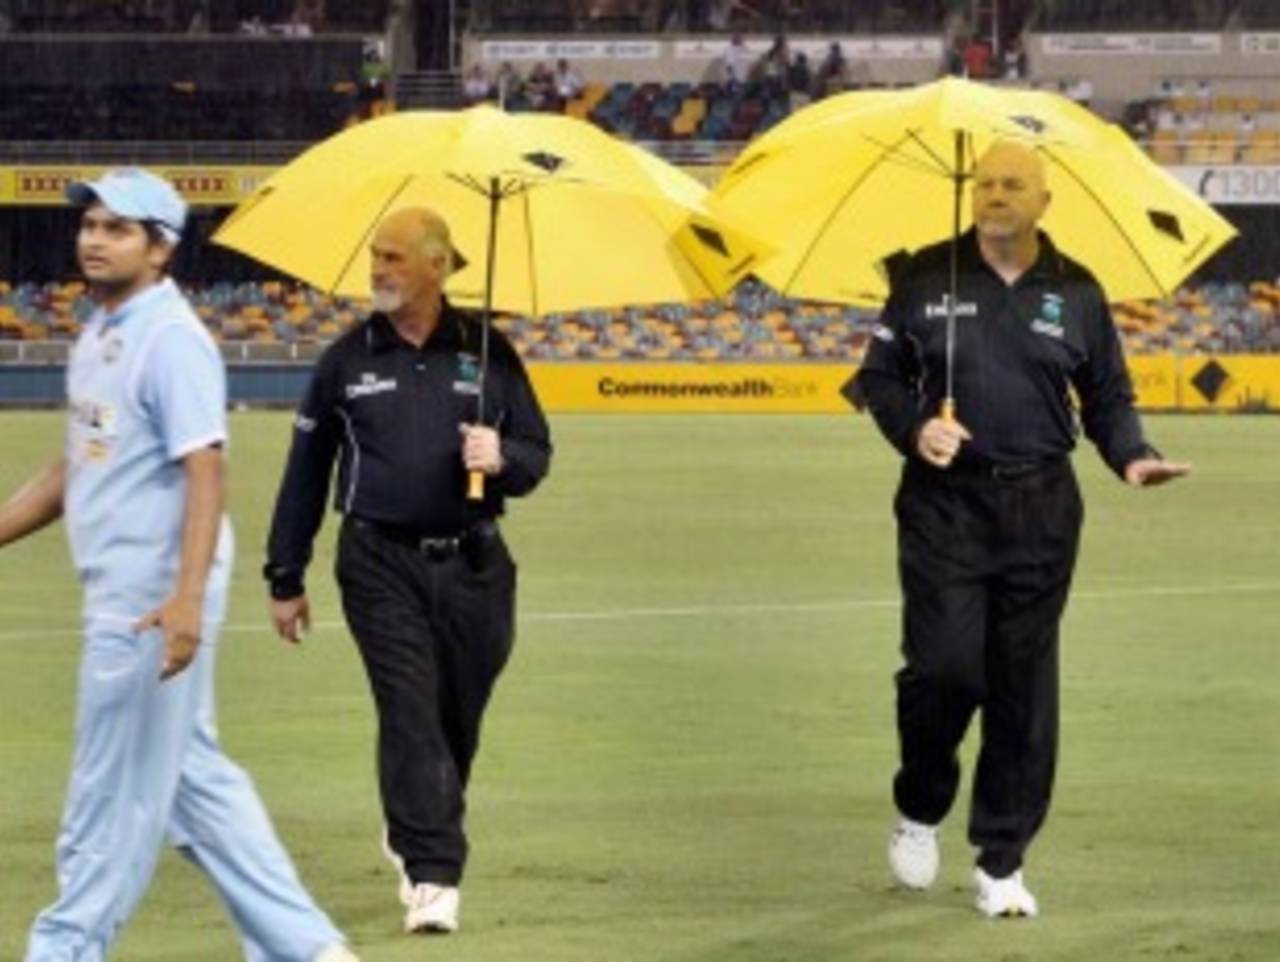 Umpires Steve Davis and Rudi Koertzen walk out to the middle with umbrellas, India v Sri Lanka, CB Series, February 5, 2008